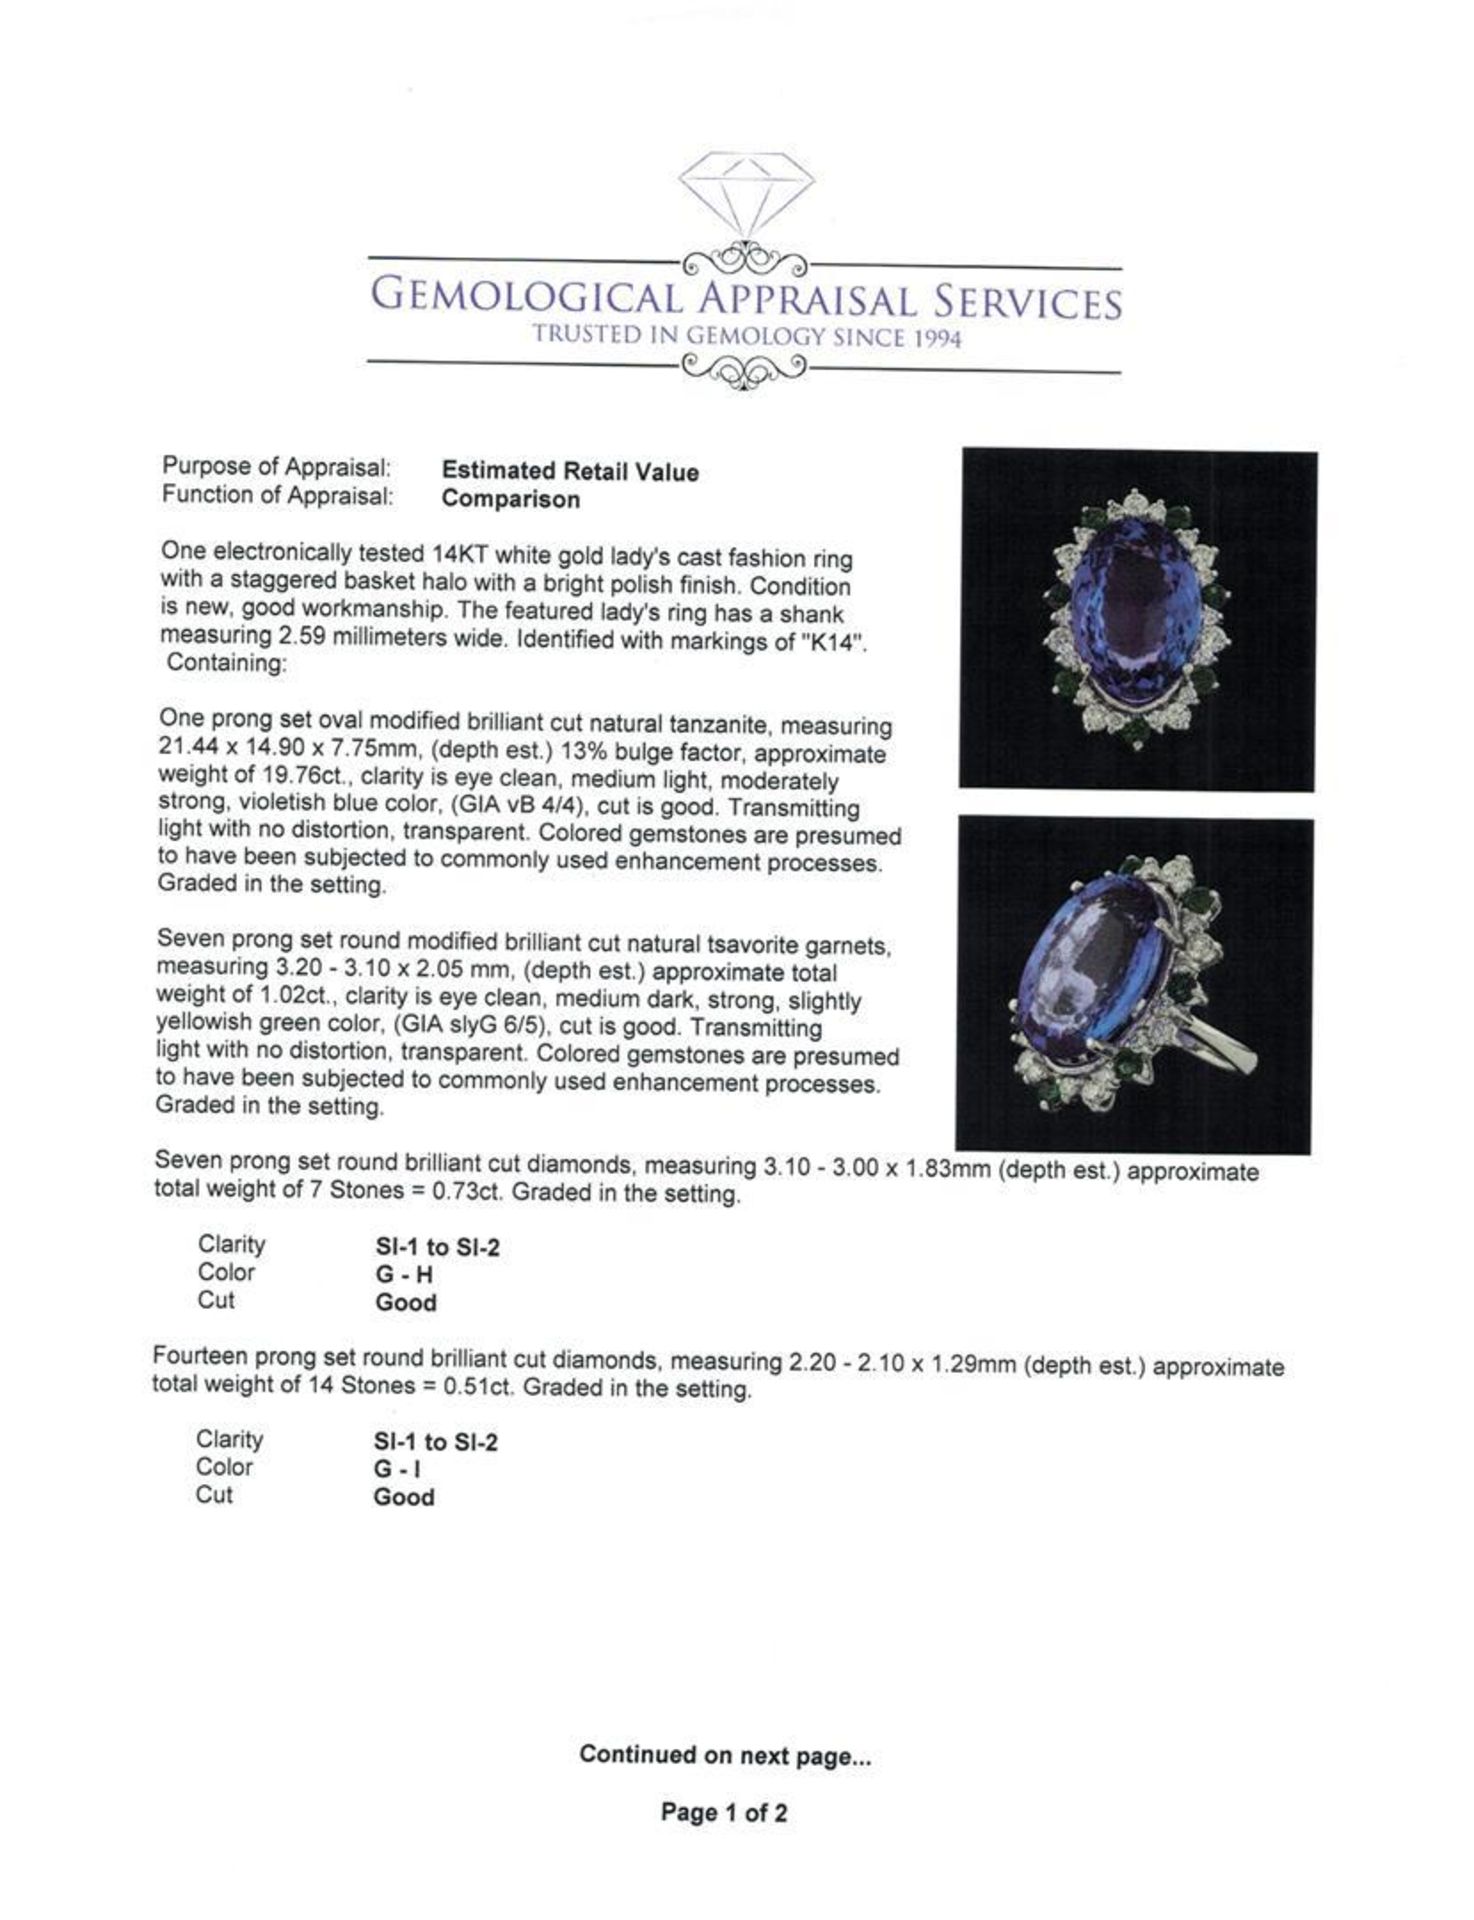 20.78 ctw Tanzanite and Diamond Ring - 14KT White Gold - Image 5 of 6